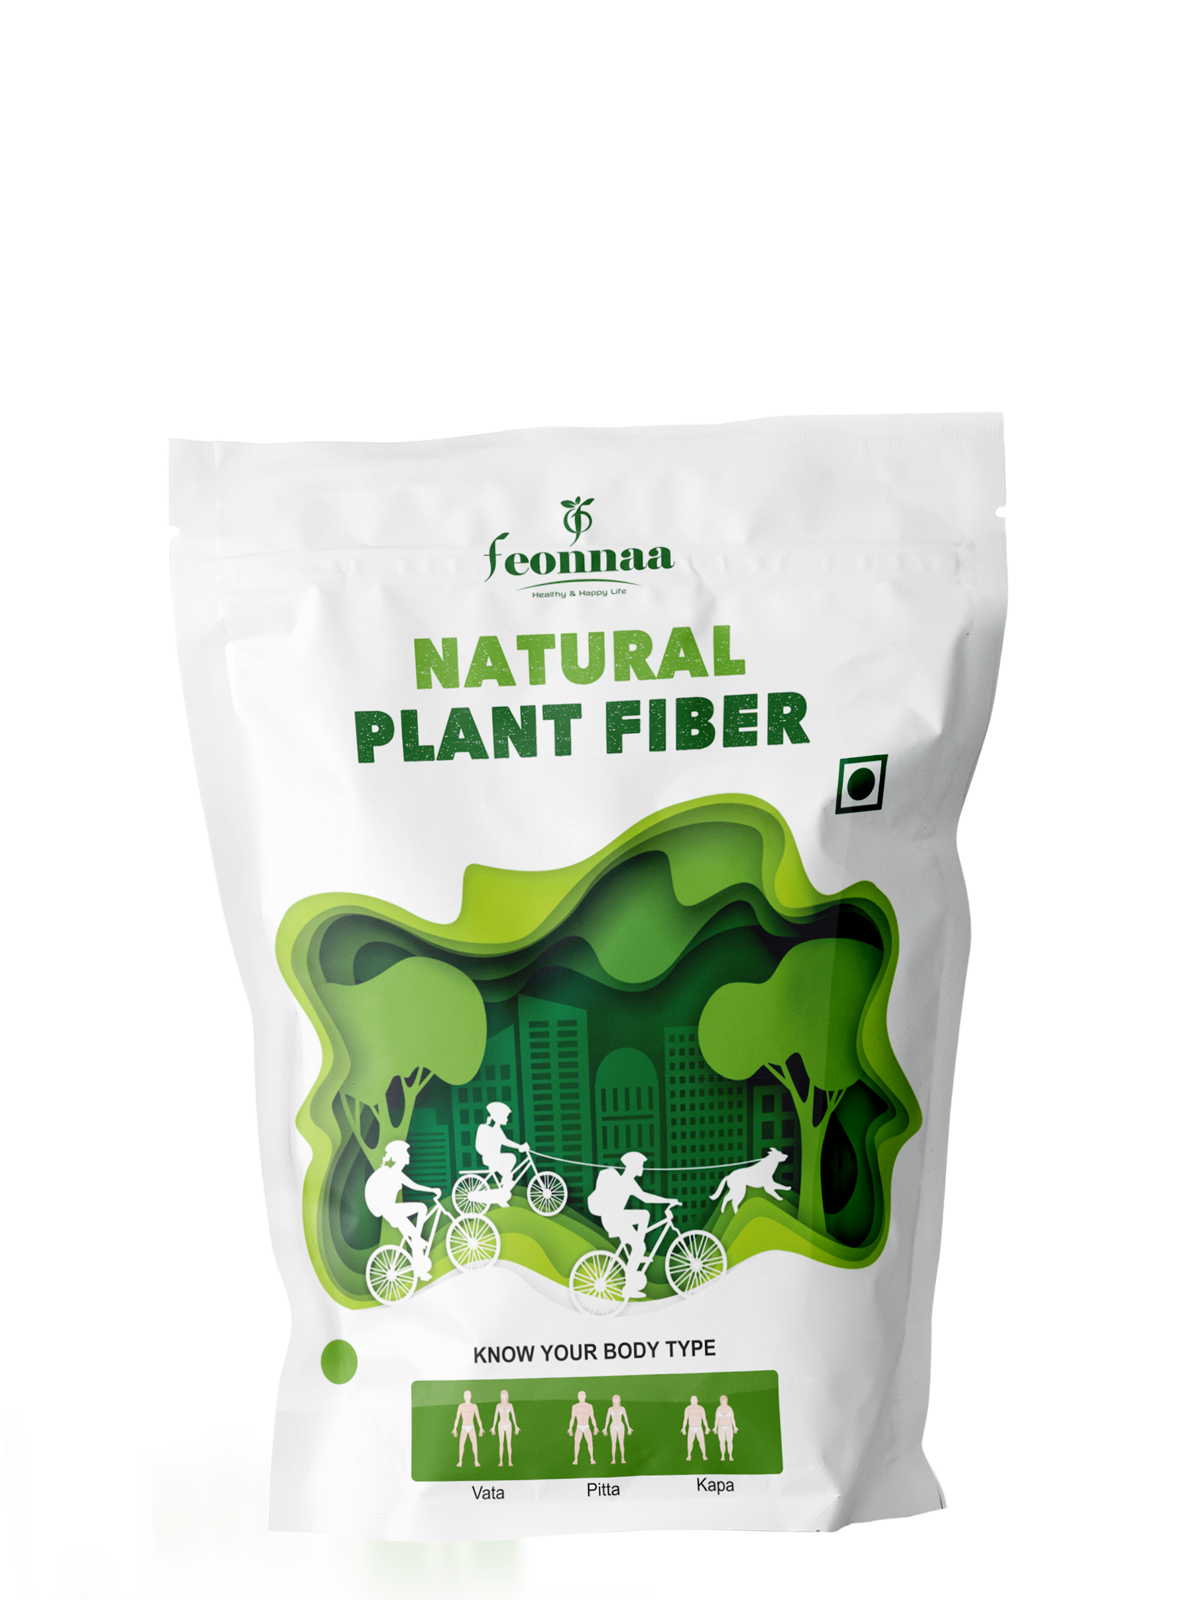 Nature plant fibre